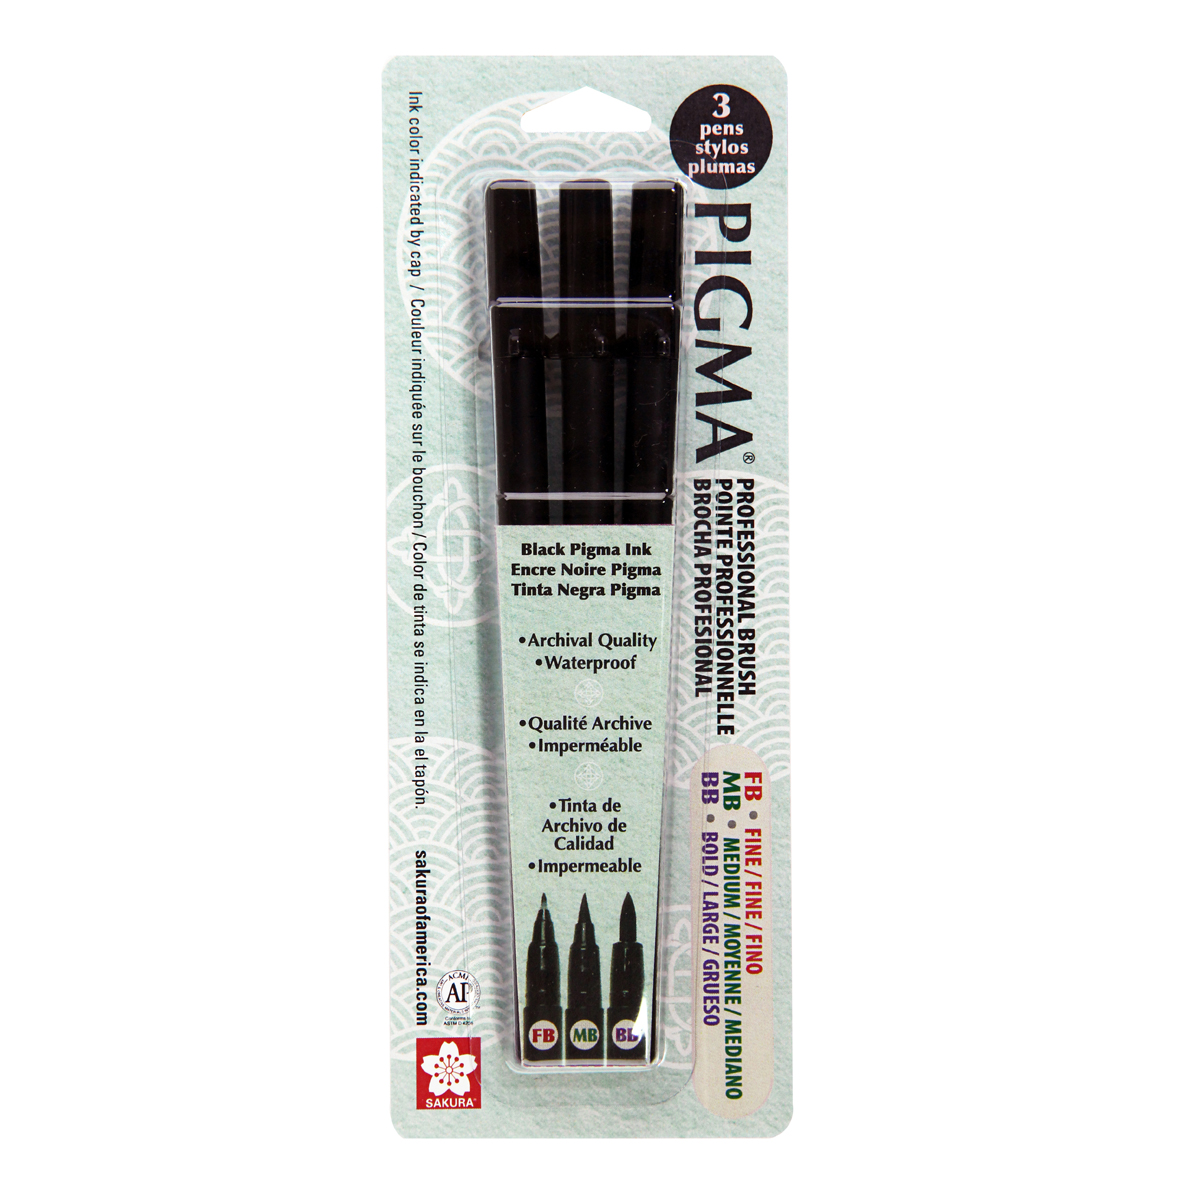 Sakura Pigma Professional Brush Pen Set, Black (Fine, Medium, Bold) - image 1 of 2